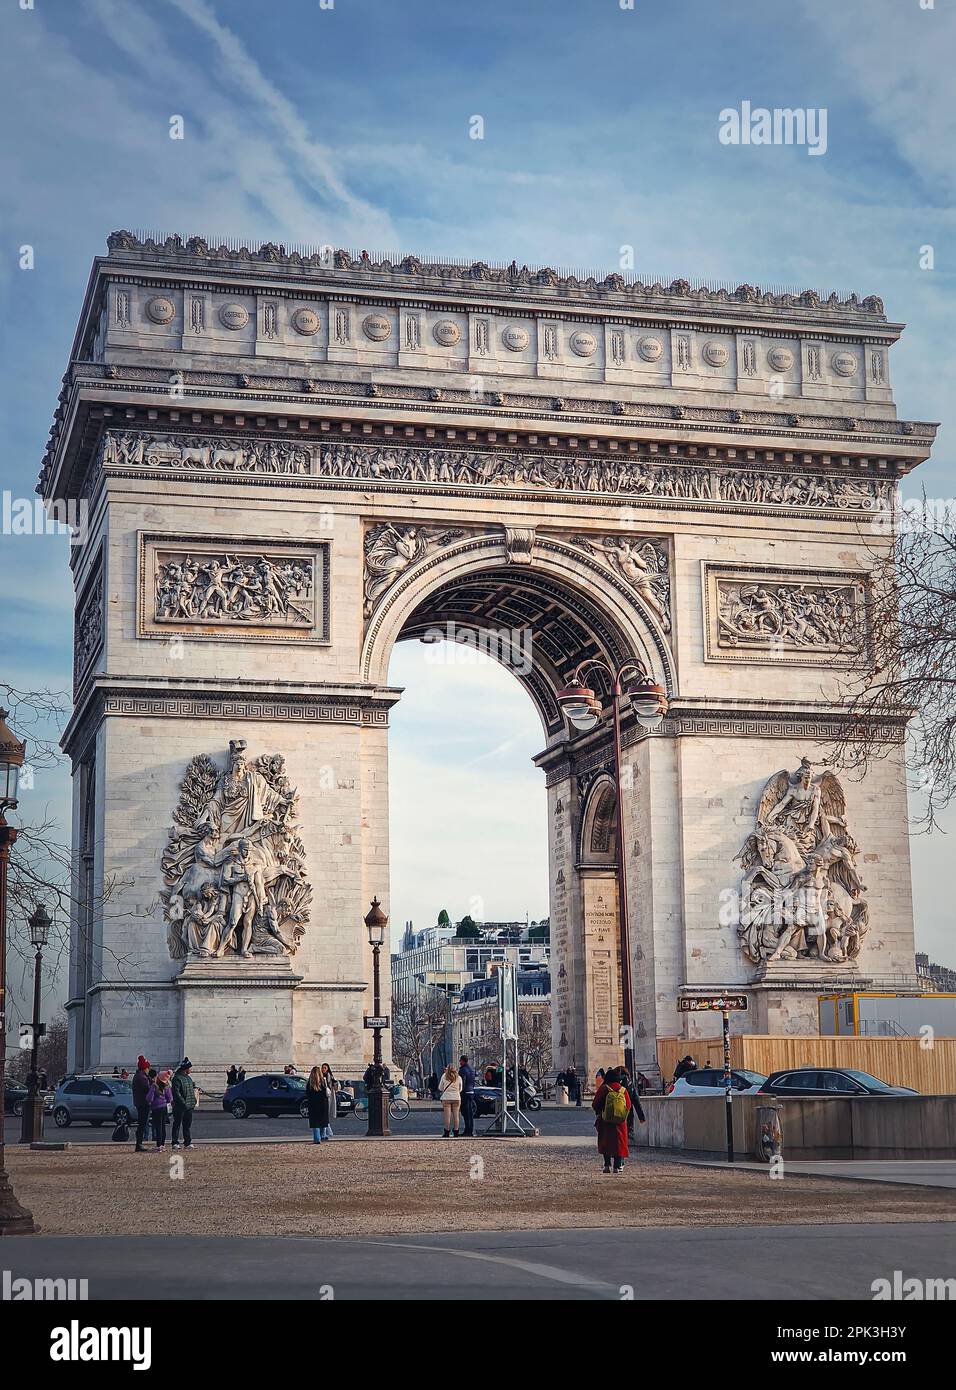 Arco trionfale, Parigi, Francia. Monumento storico dell'Arc de Triomphe Foto Stock